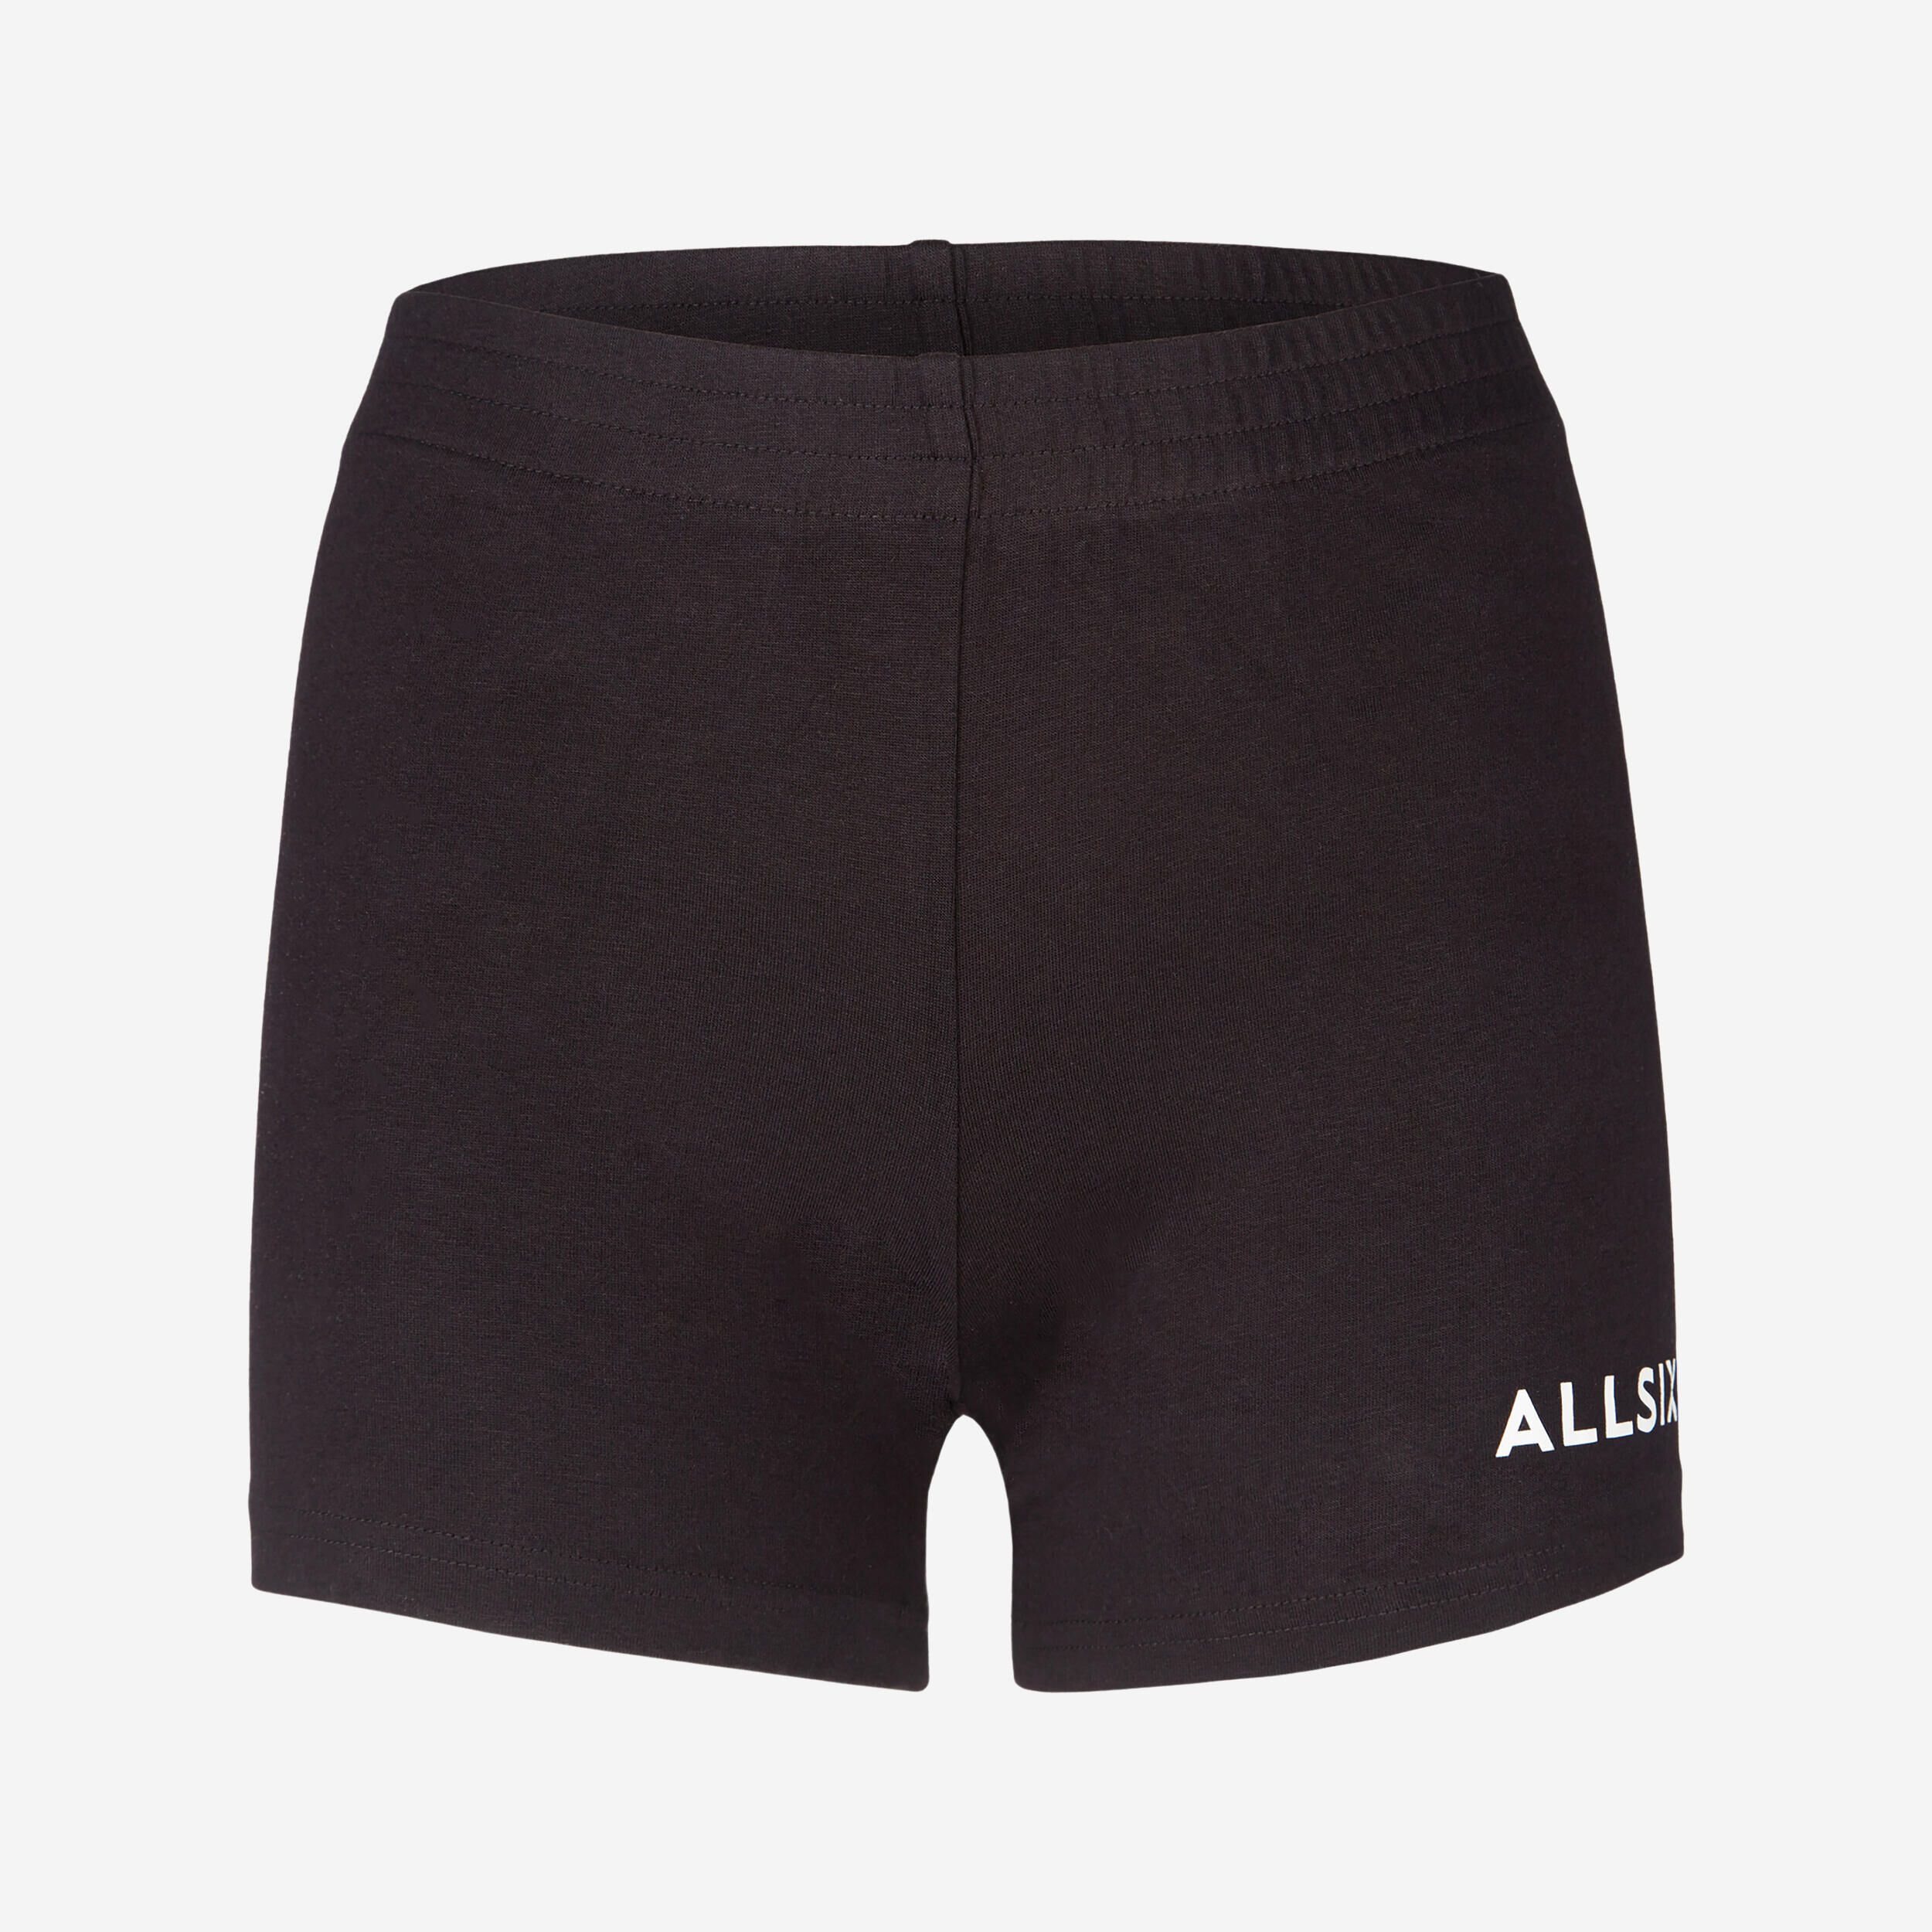 ALLSIX V100 Girls' Volleyball Shorts - Black